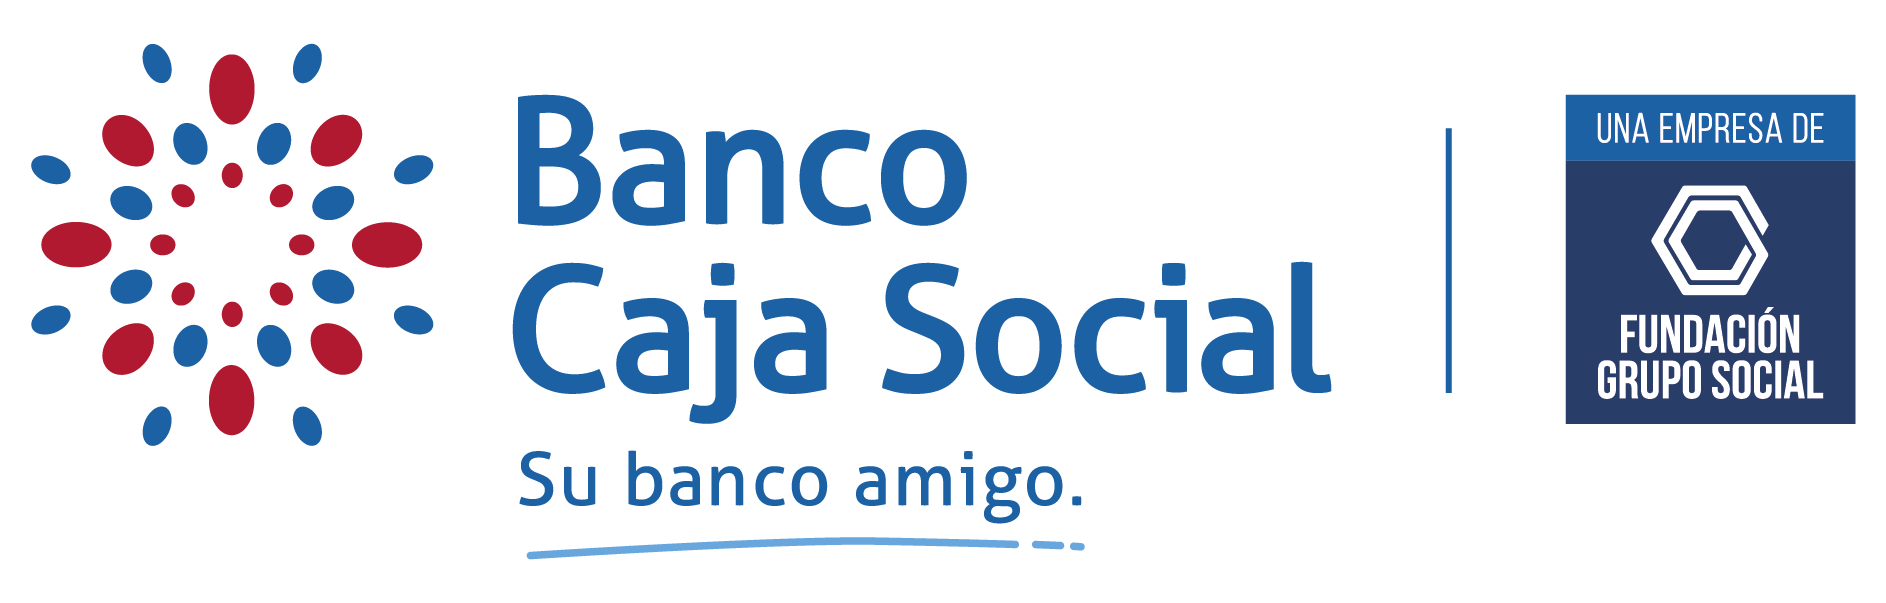 banco caja social asobancaria